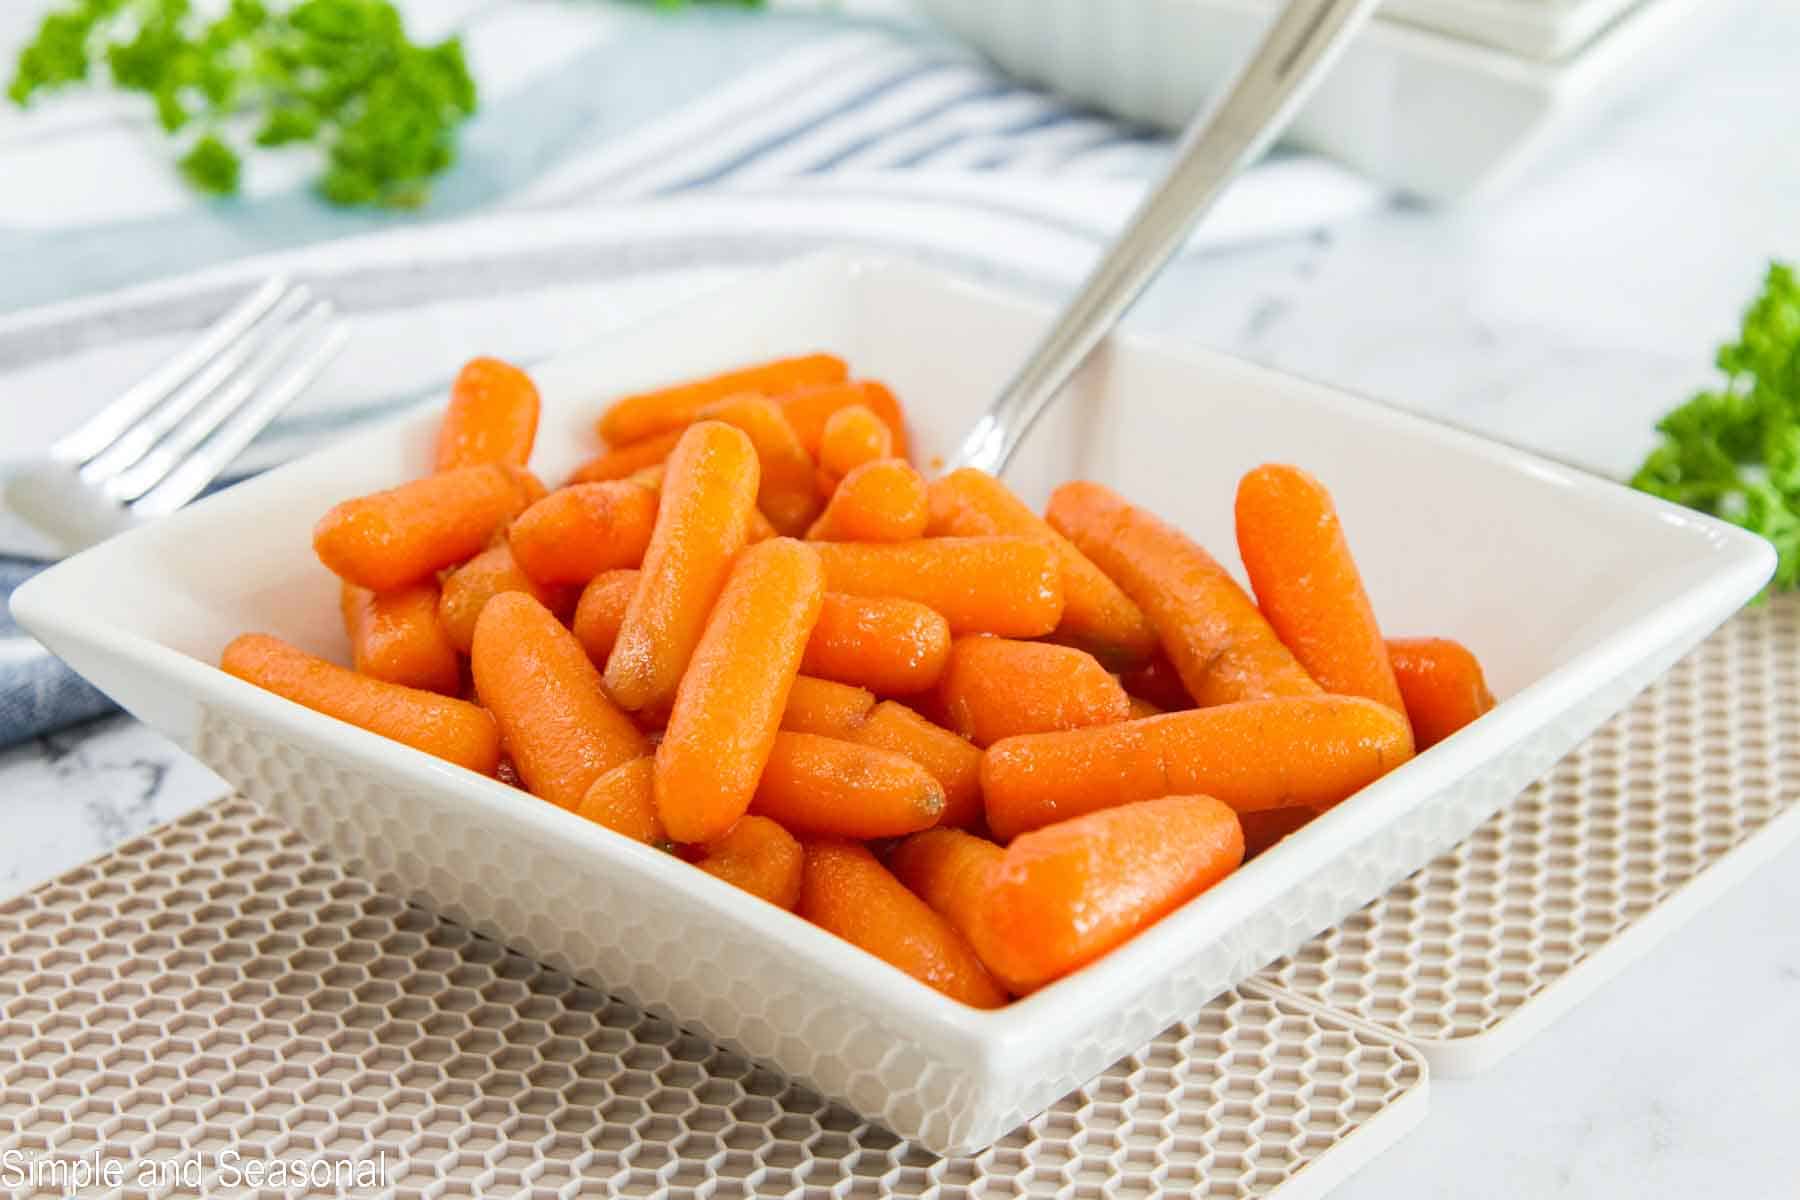 Crockpot Express Glazed Carrots - Simple and Seasonal